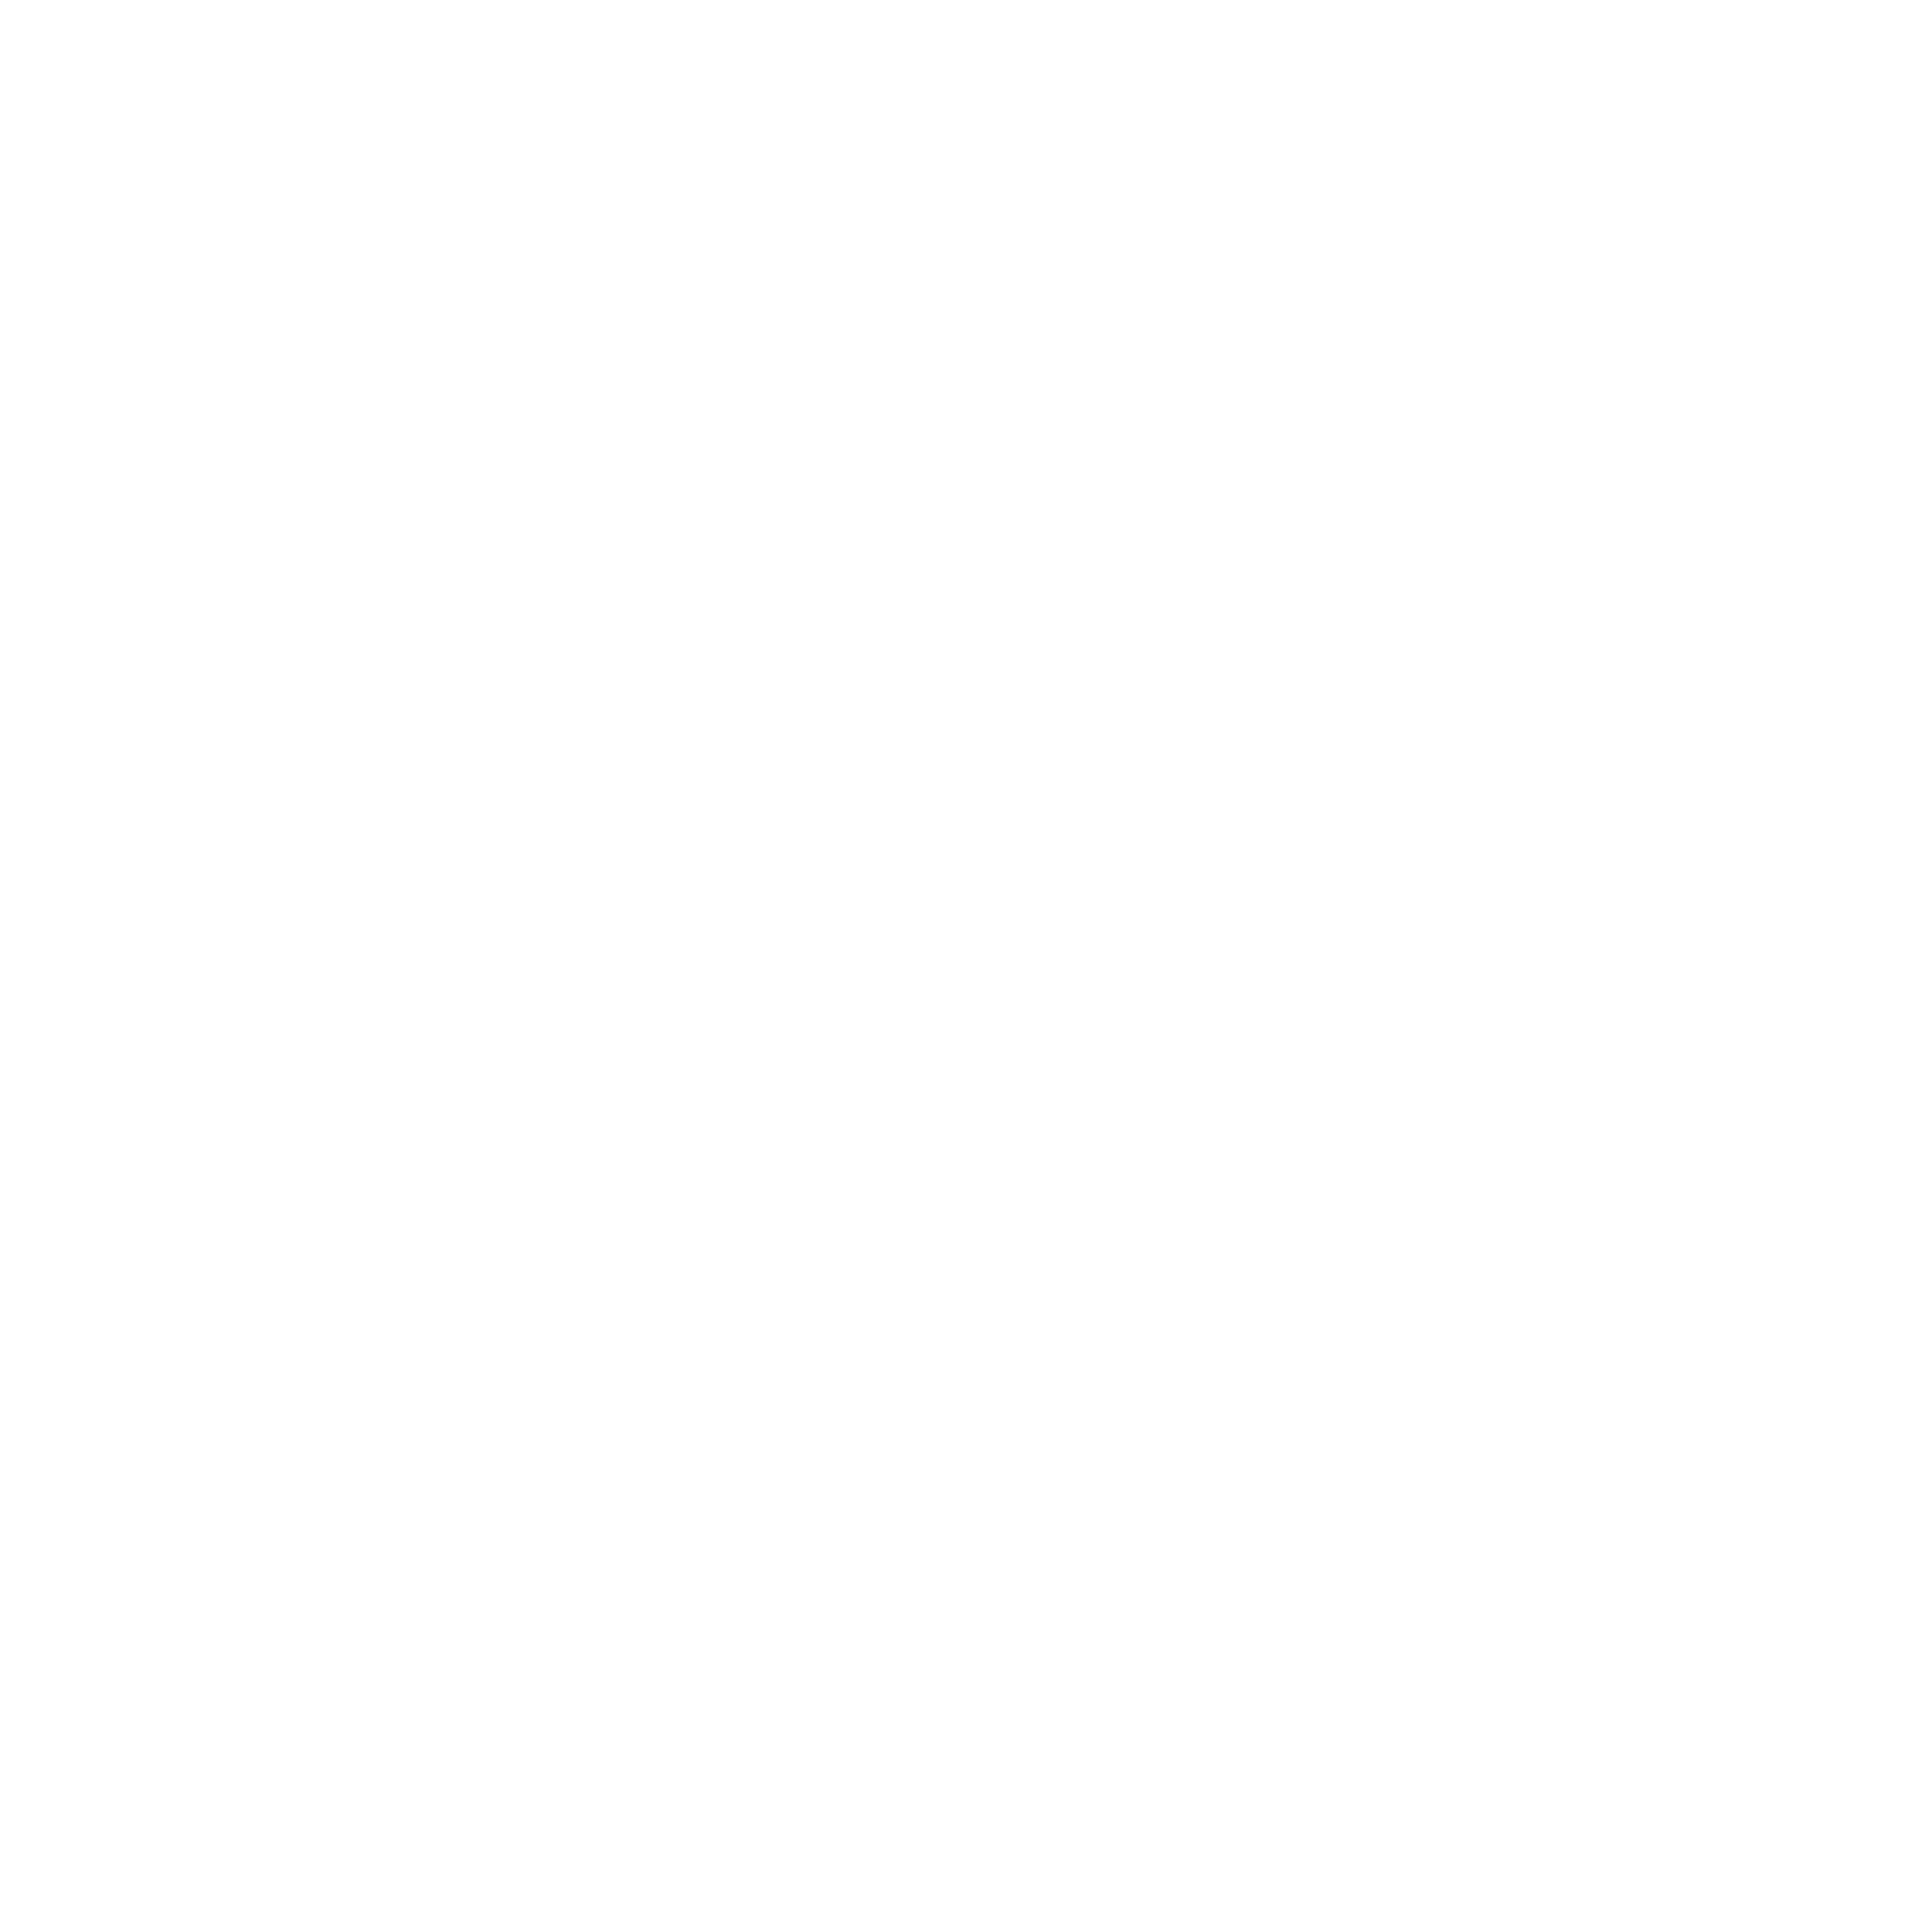 Wiley_Wordmark_white3